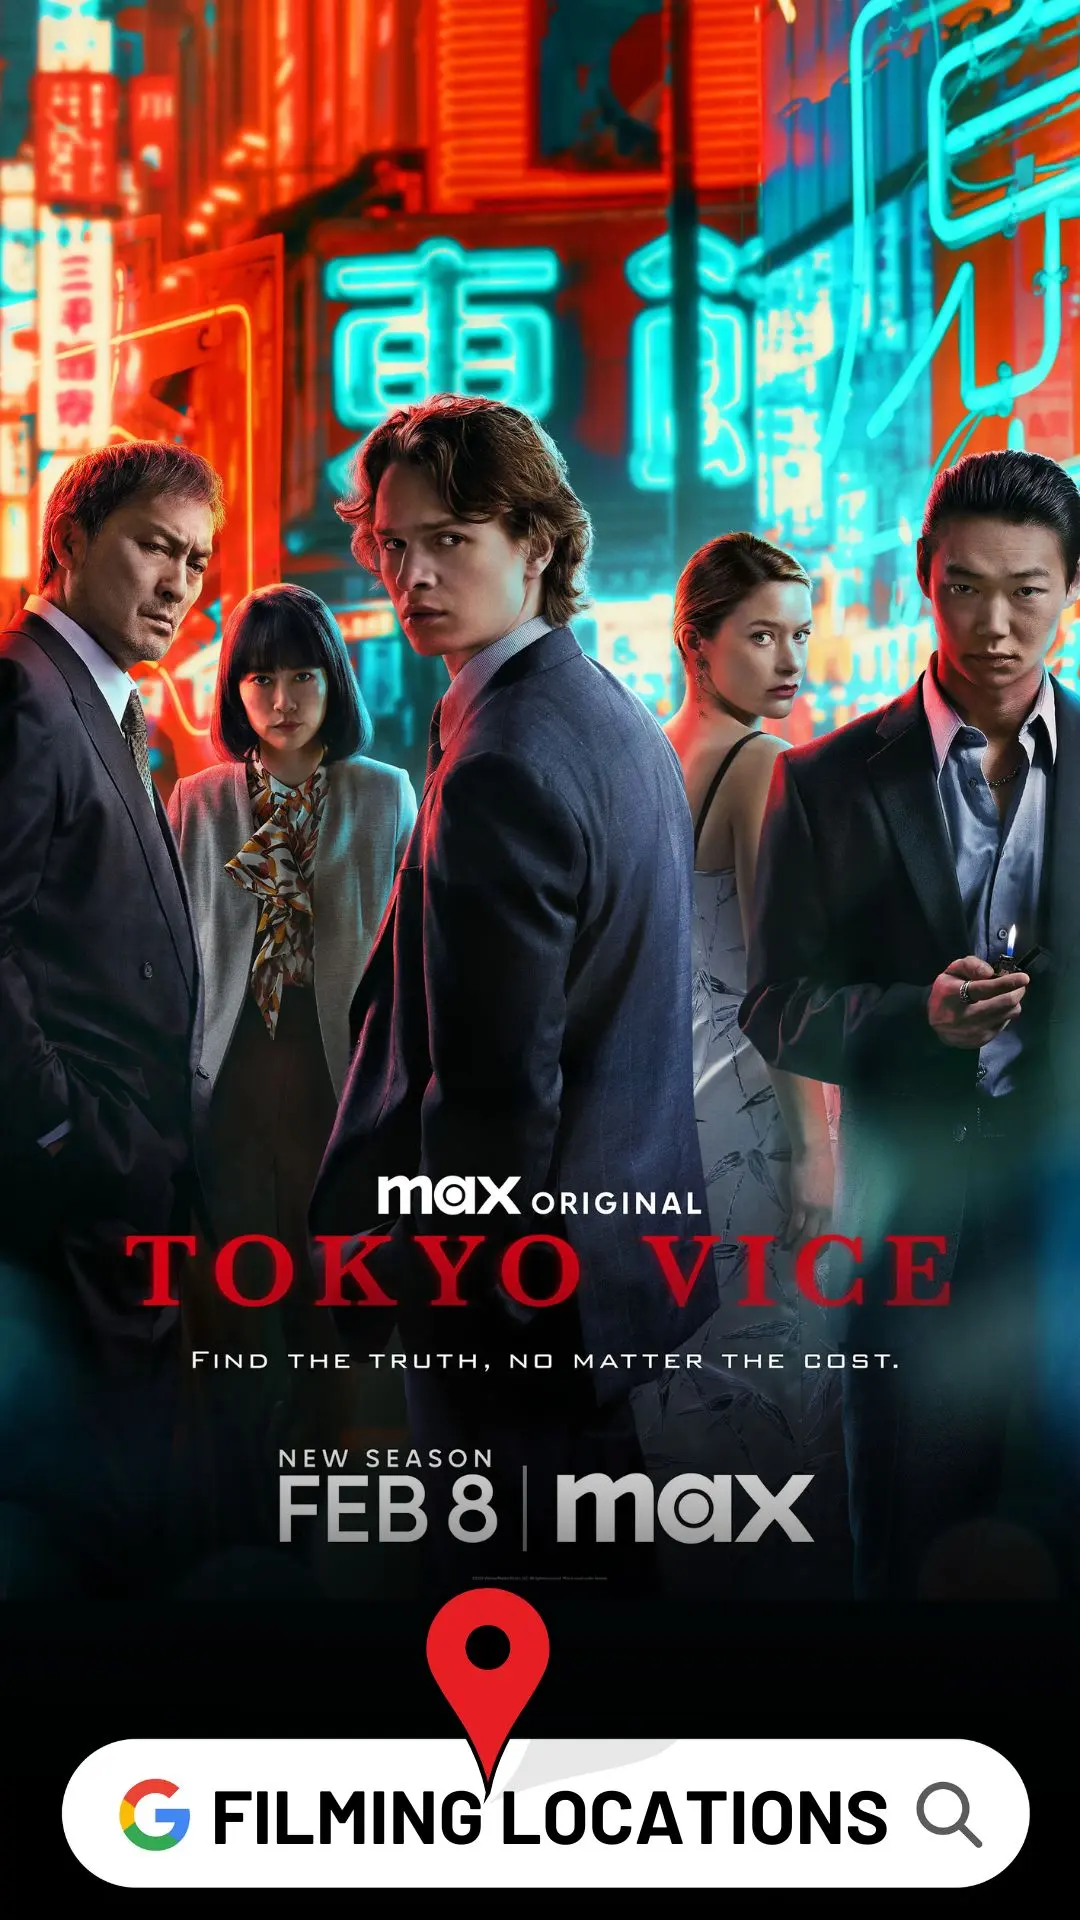 Tokyo Vice Season 2 Filming Locations